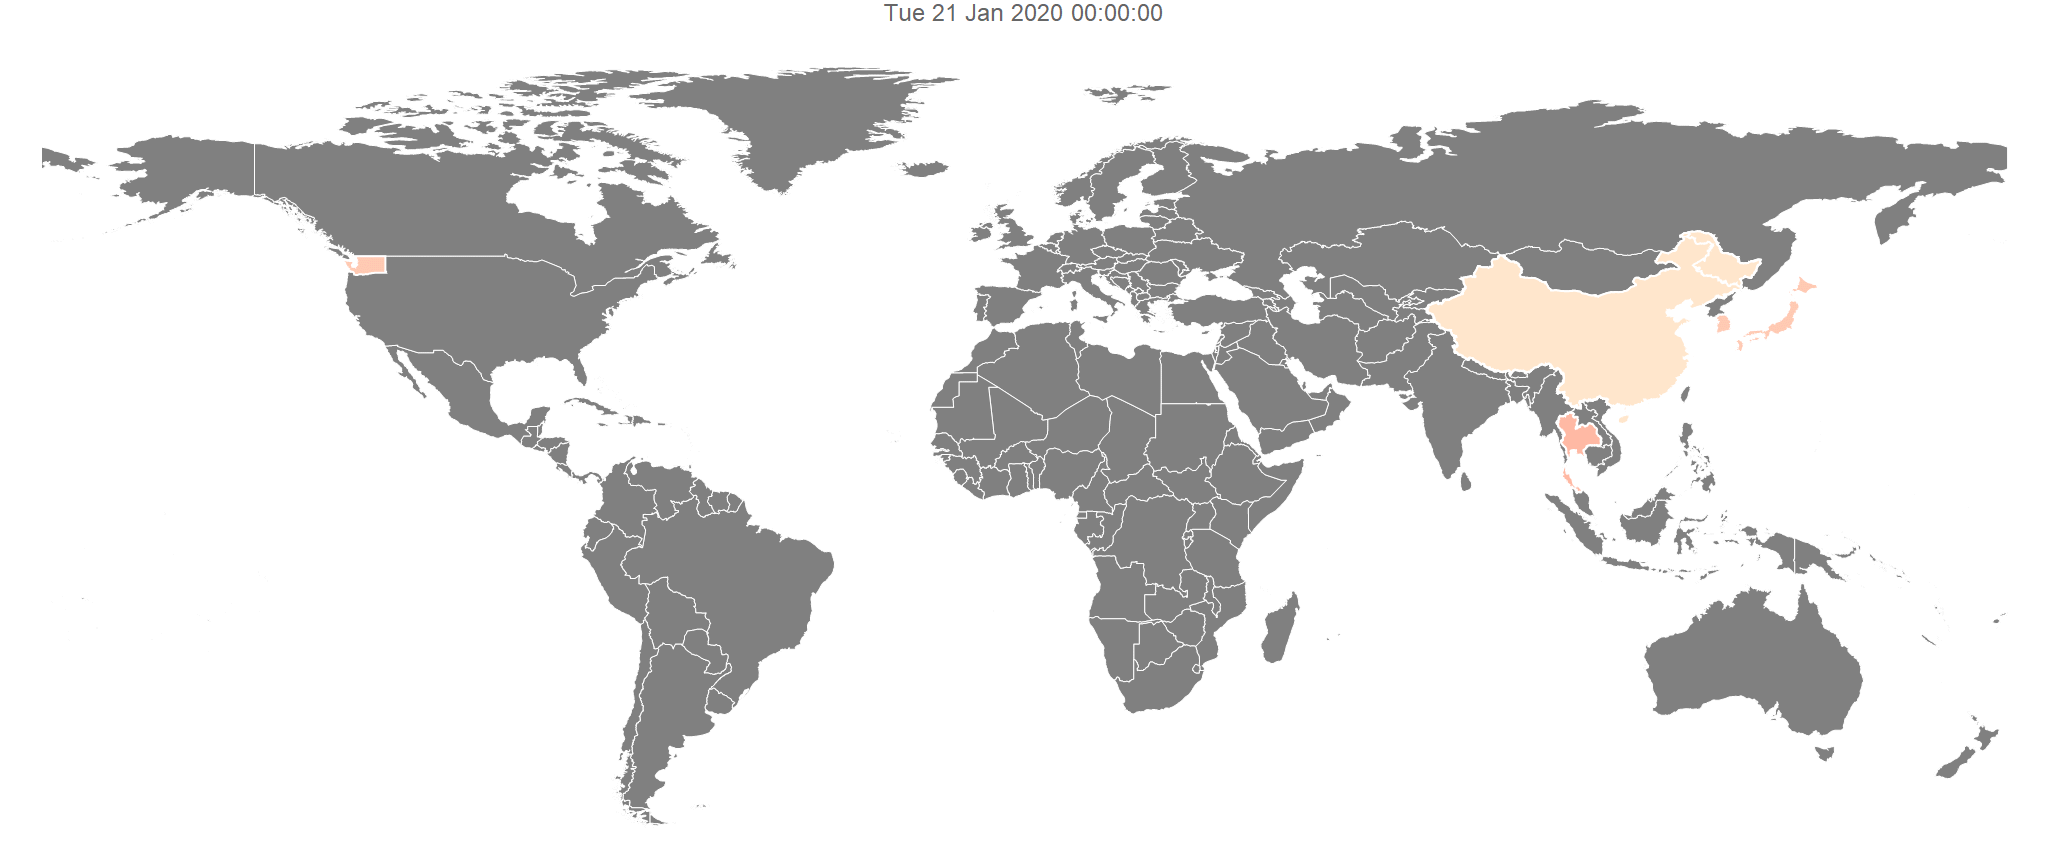 Animation of global spread of Coronavirus